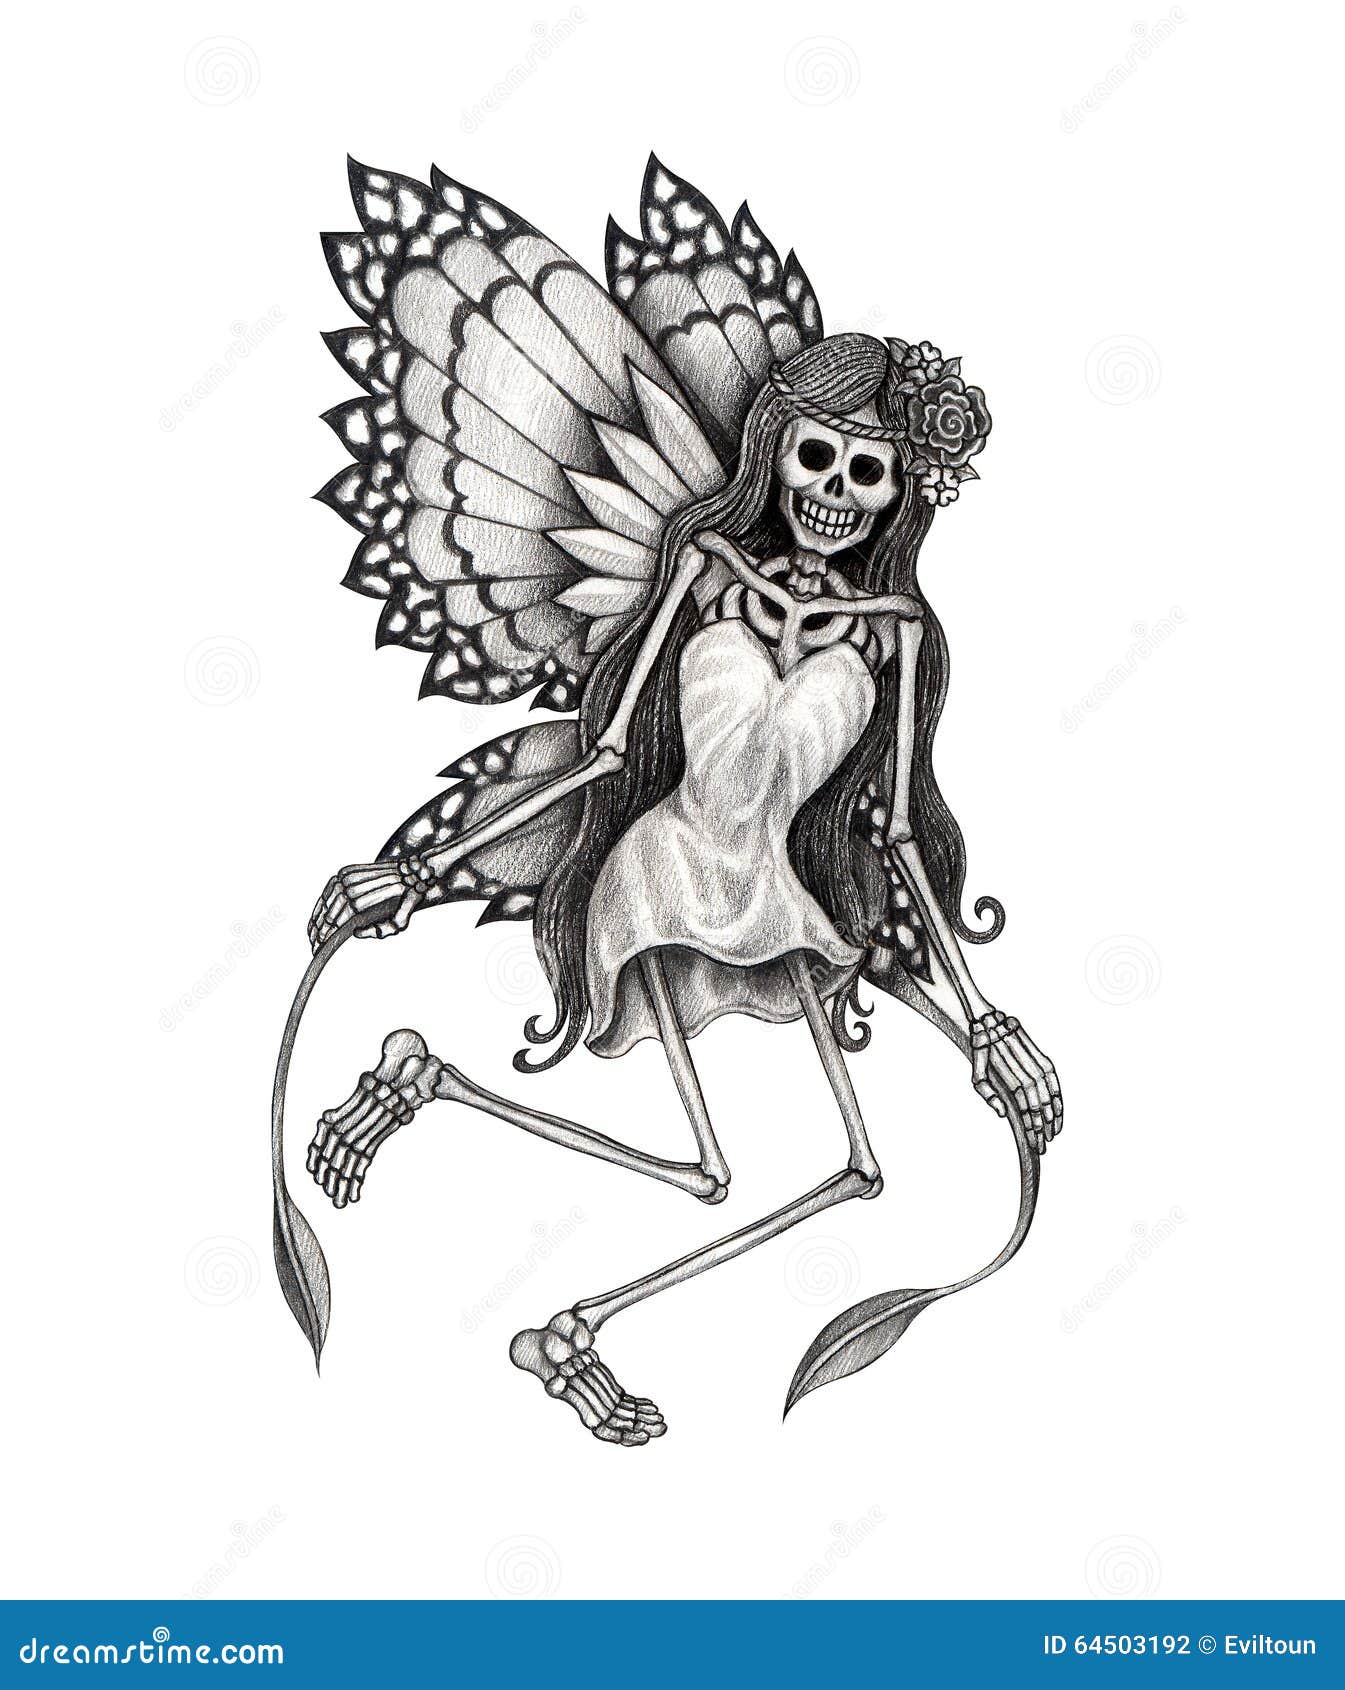 Fairy bones | Skeleton tattoos, Dragonfly tattoo design, Fairy tattoo